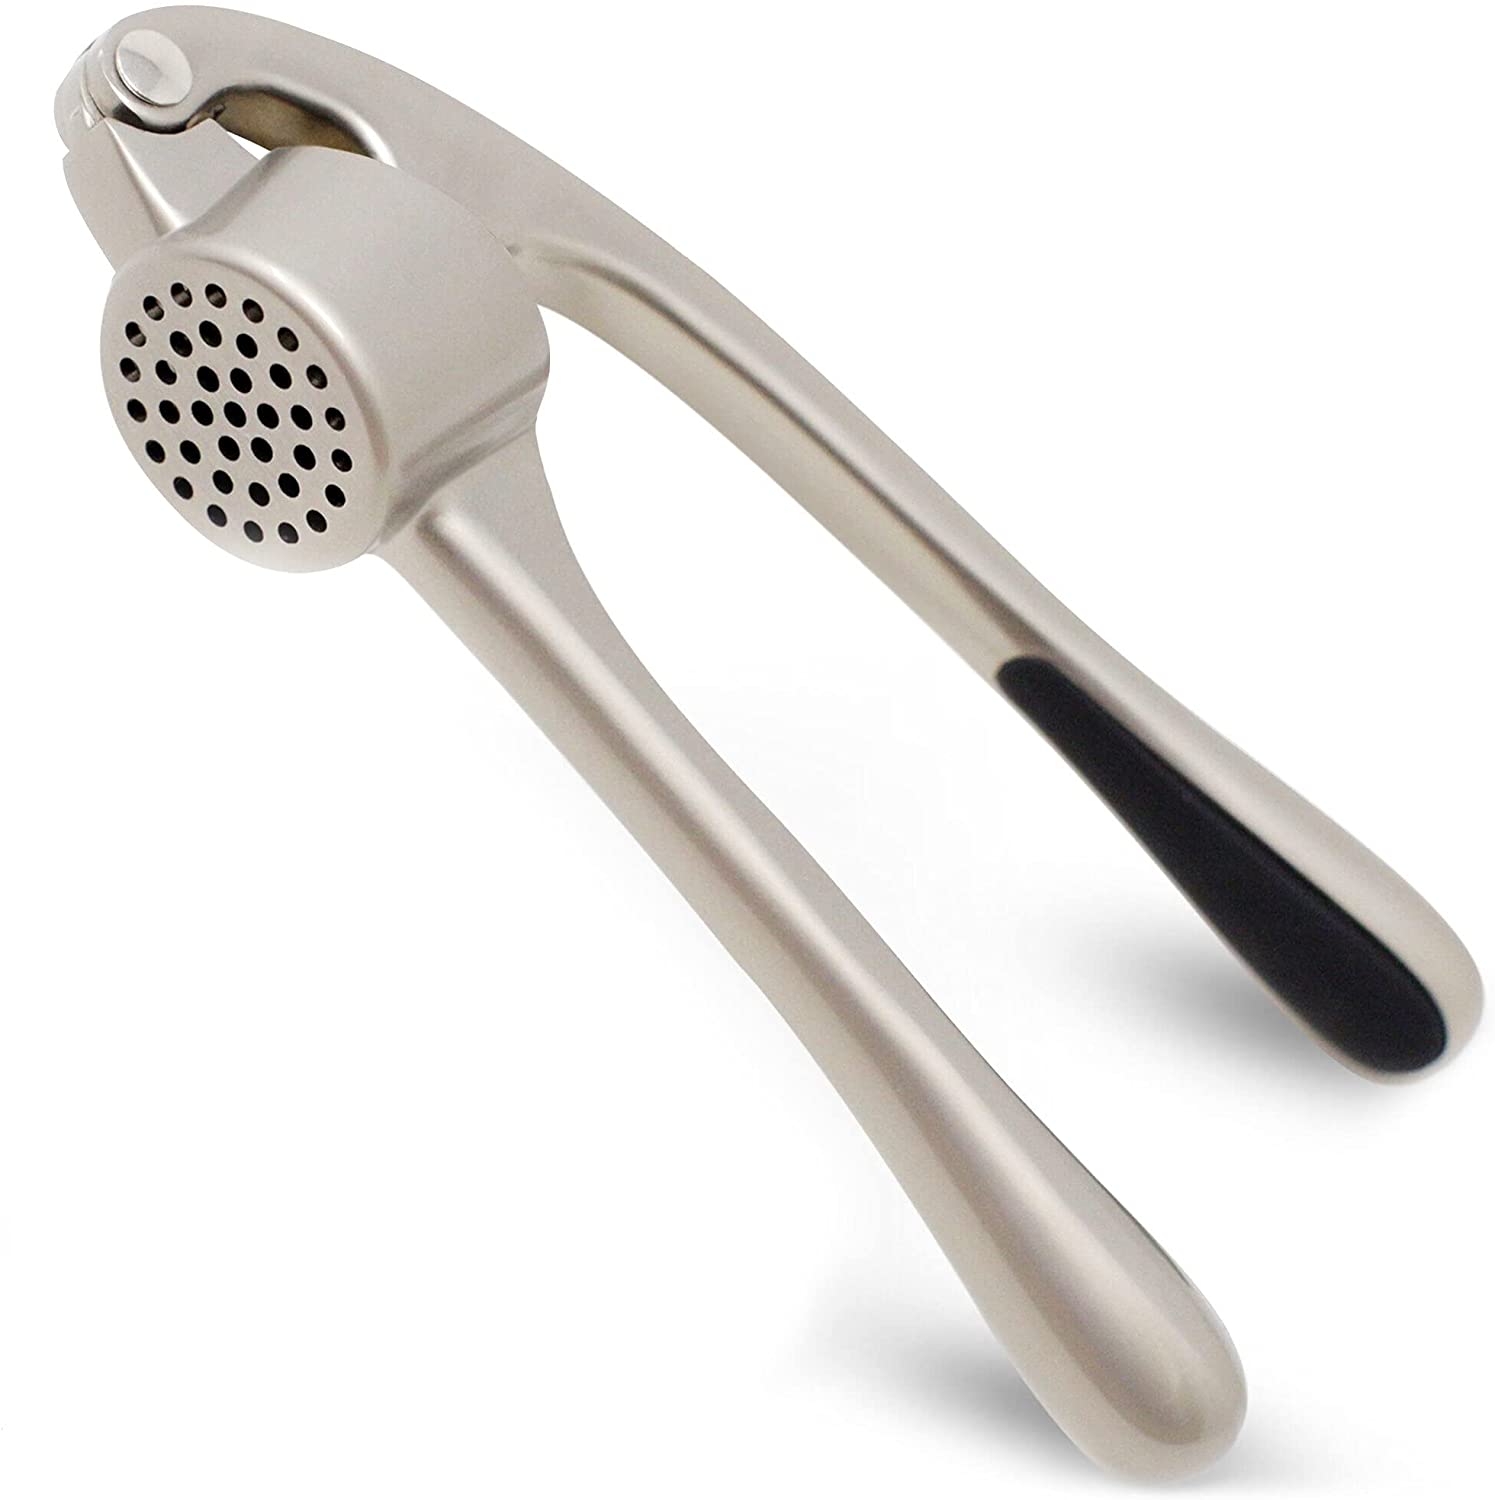 https://www.dontwasteyourmoney.com/wp-content/uploads/2020/05/zulay-kitchen-premium-soft-easy-squeeze-ergonomic-handle-garlic-press.jpg